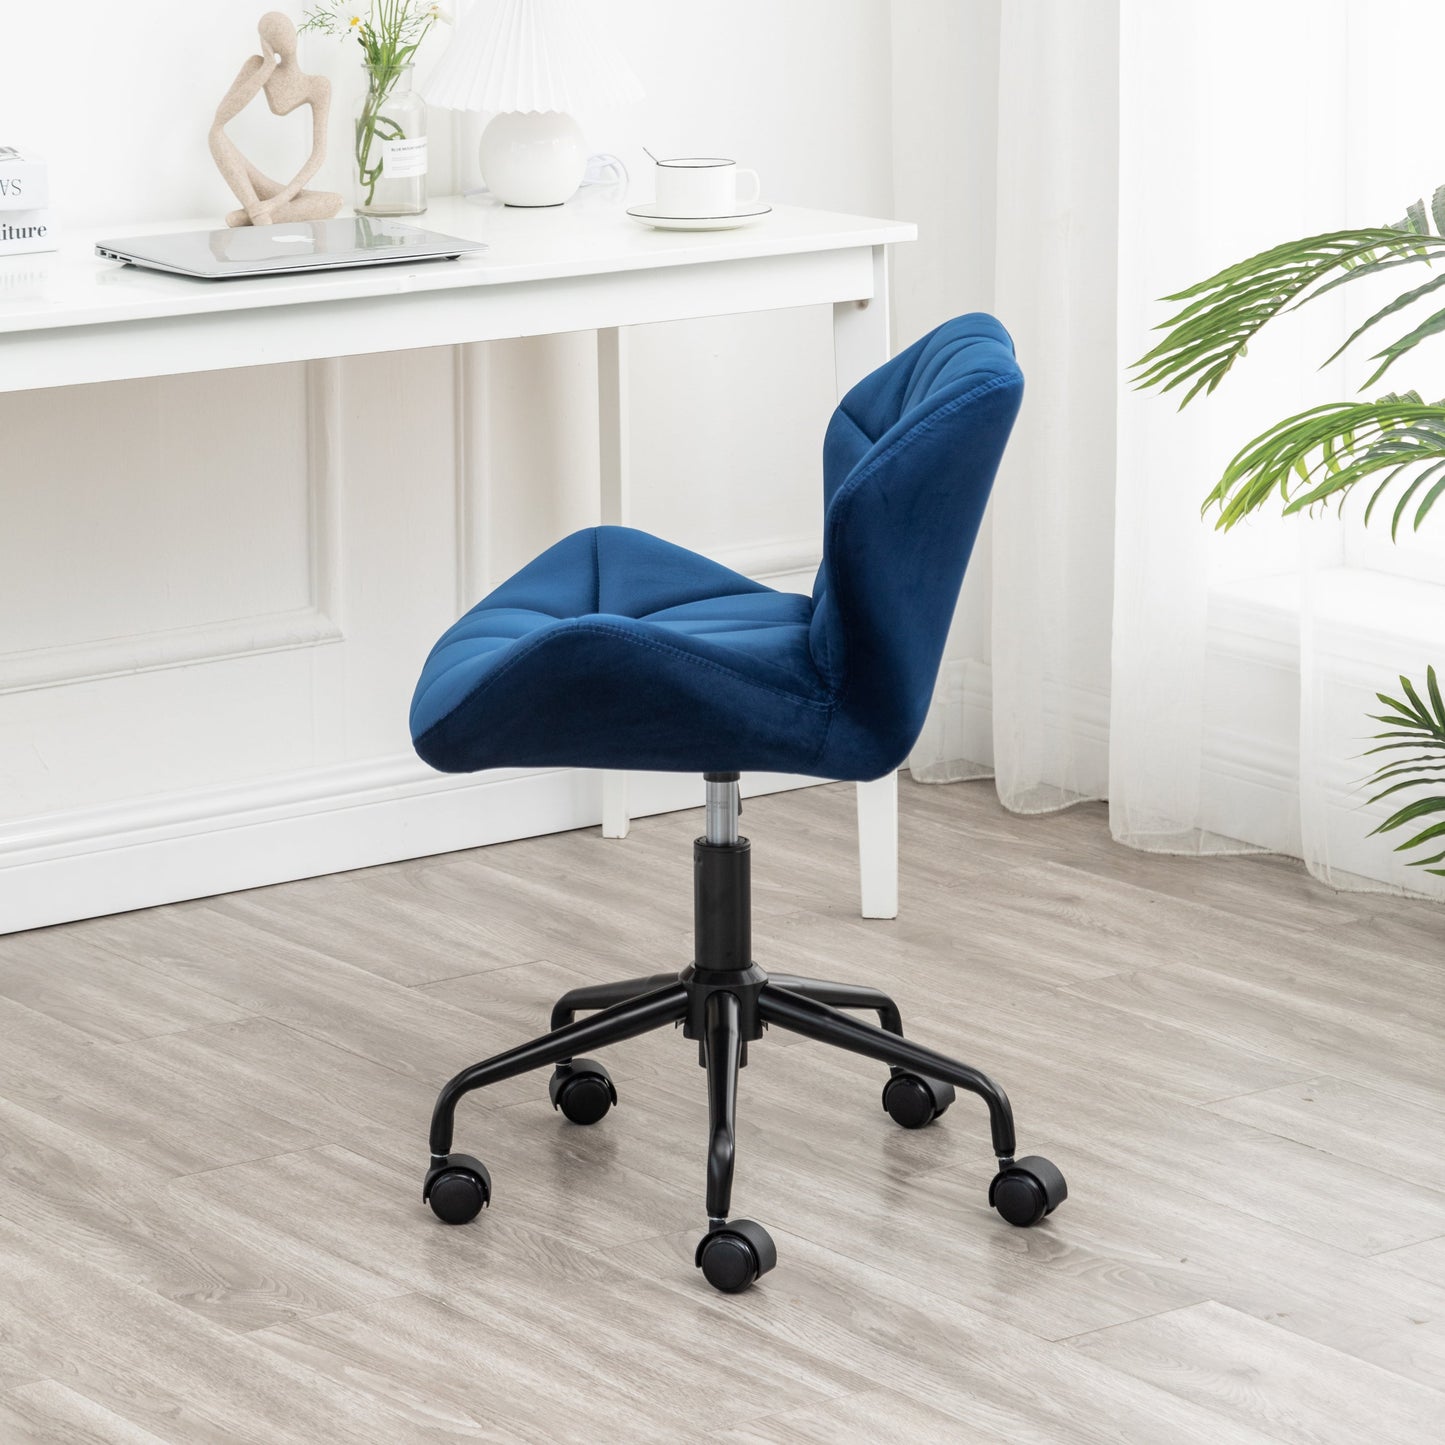 Eldon Diamond Tufted Adjustable Swivel Office Chair, Blue